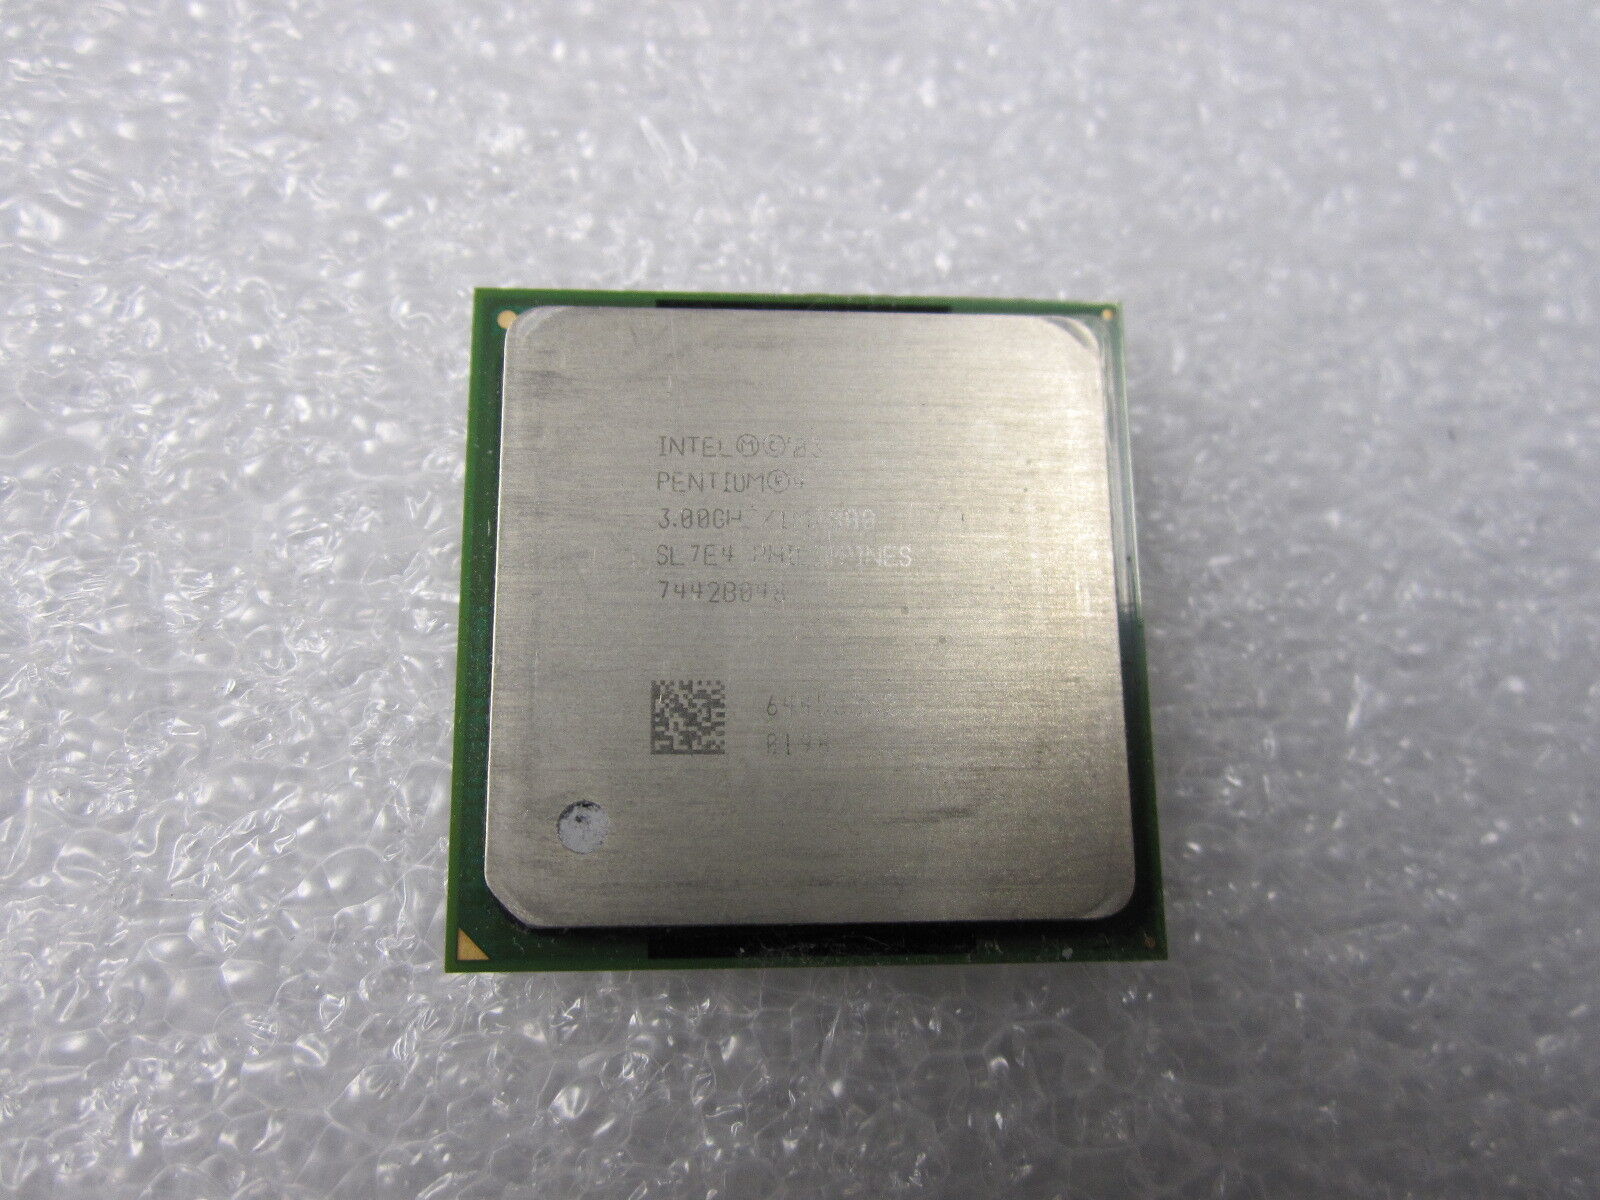 Intel SL7E4 3.00GHZ/1M/800 Pentium 4 socket 478 CPU